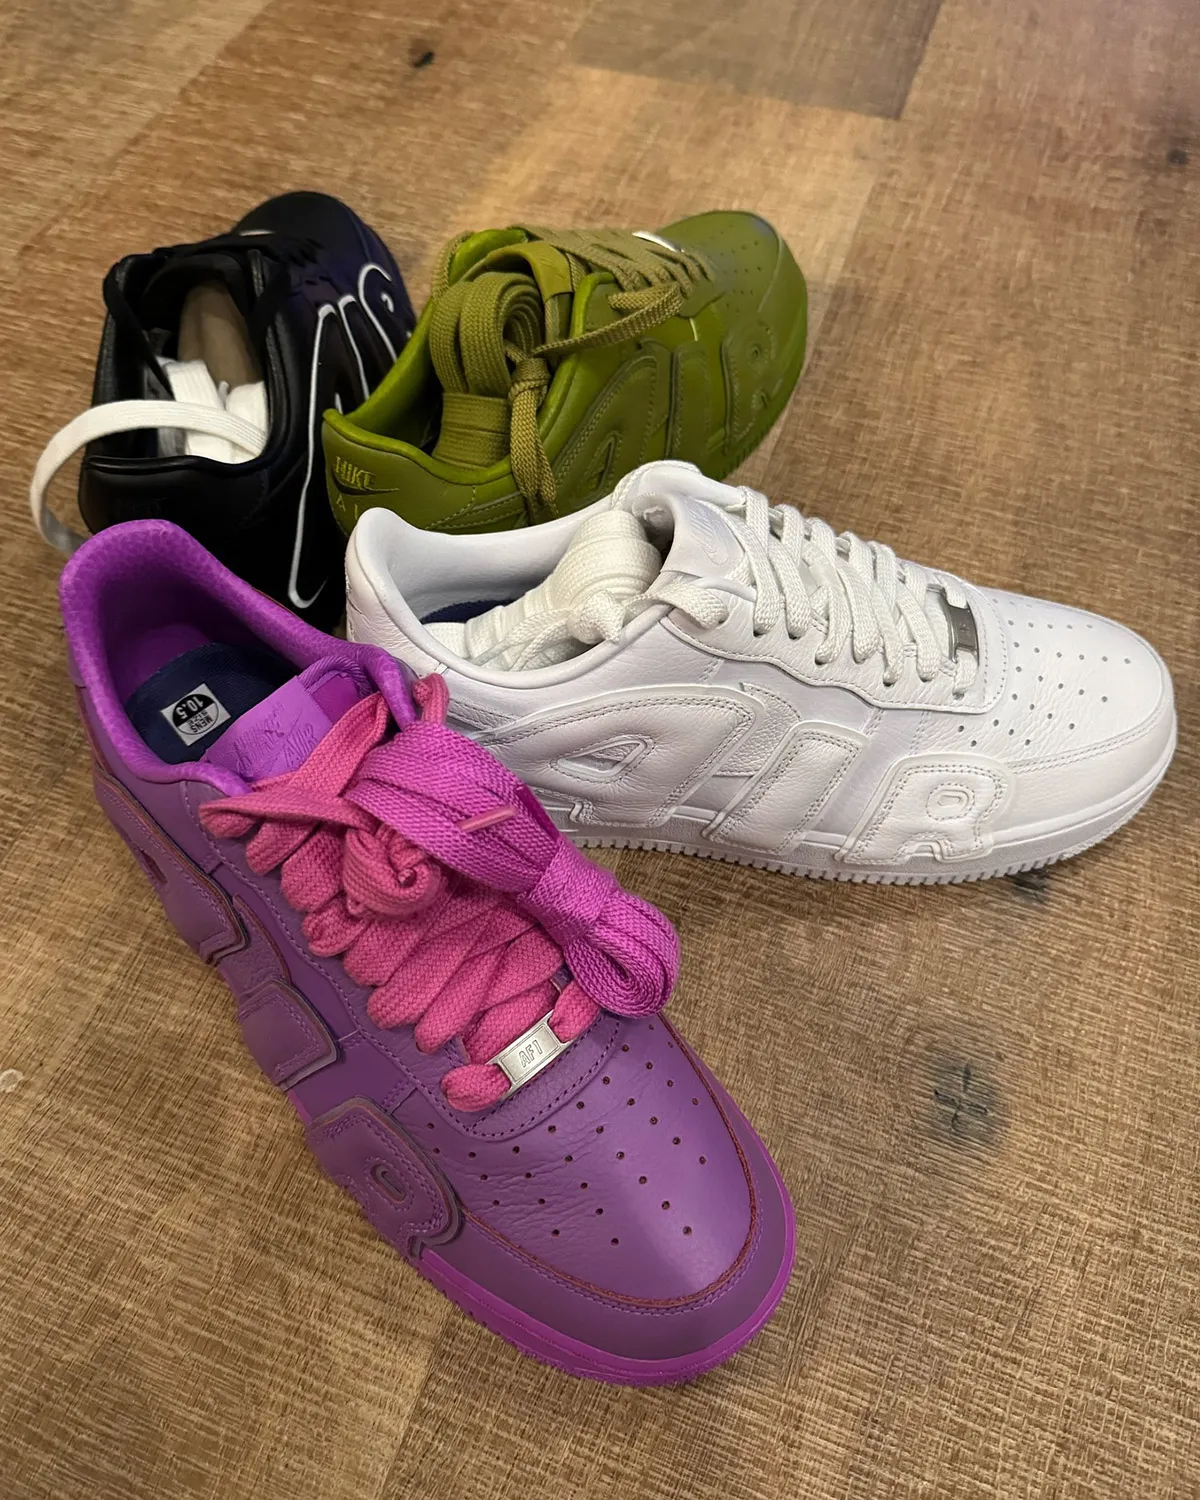 Neuer Release des CPFM nike shox turbo women white sneakers sale in vier Colourways